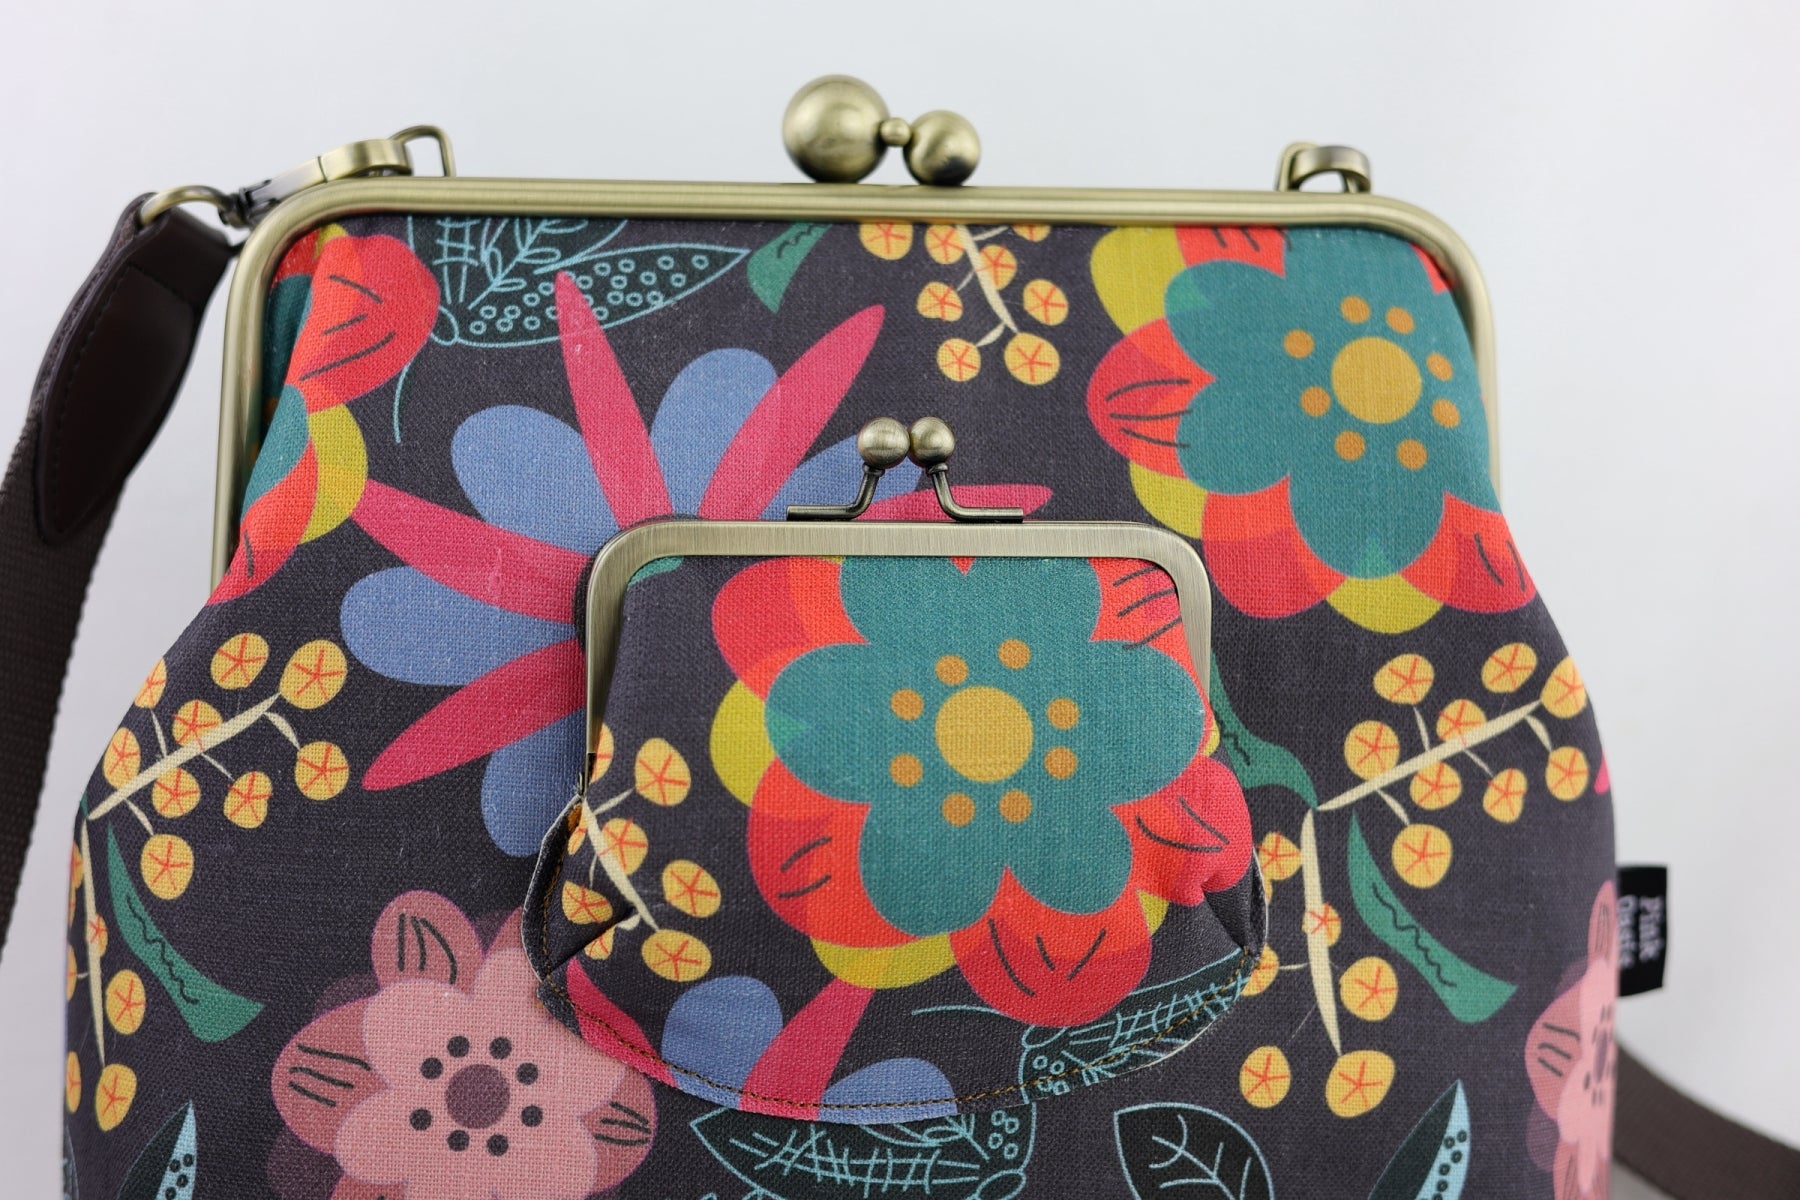 Backyard Garden Handbag and Crossbody 2 Way Bag | PINK OASIS